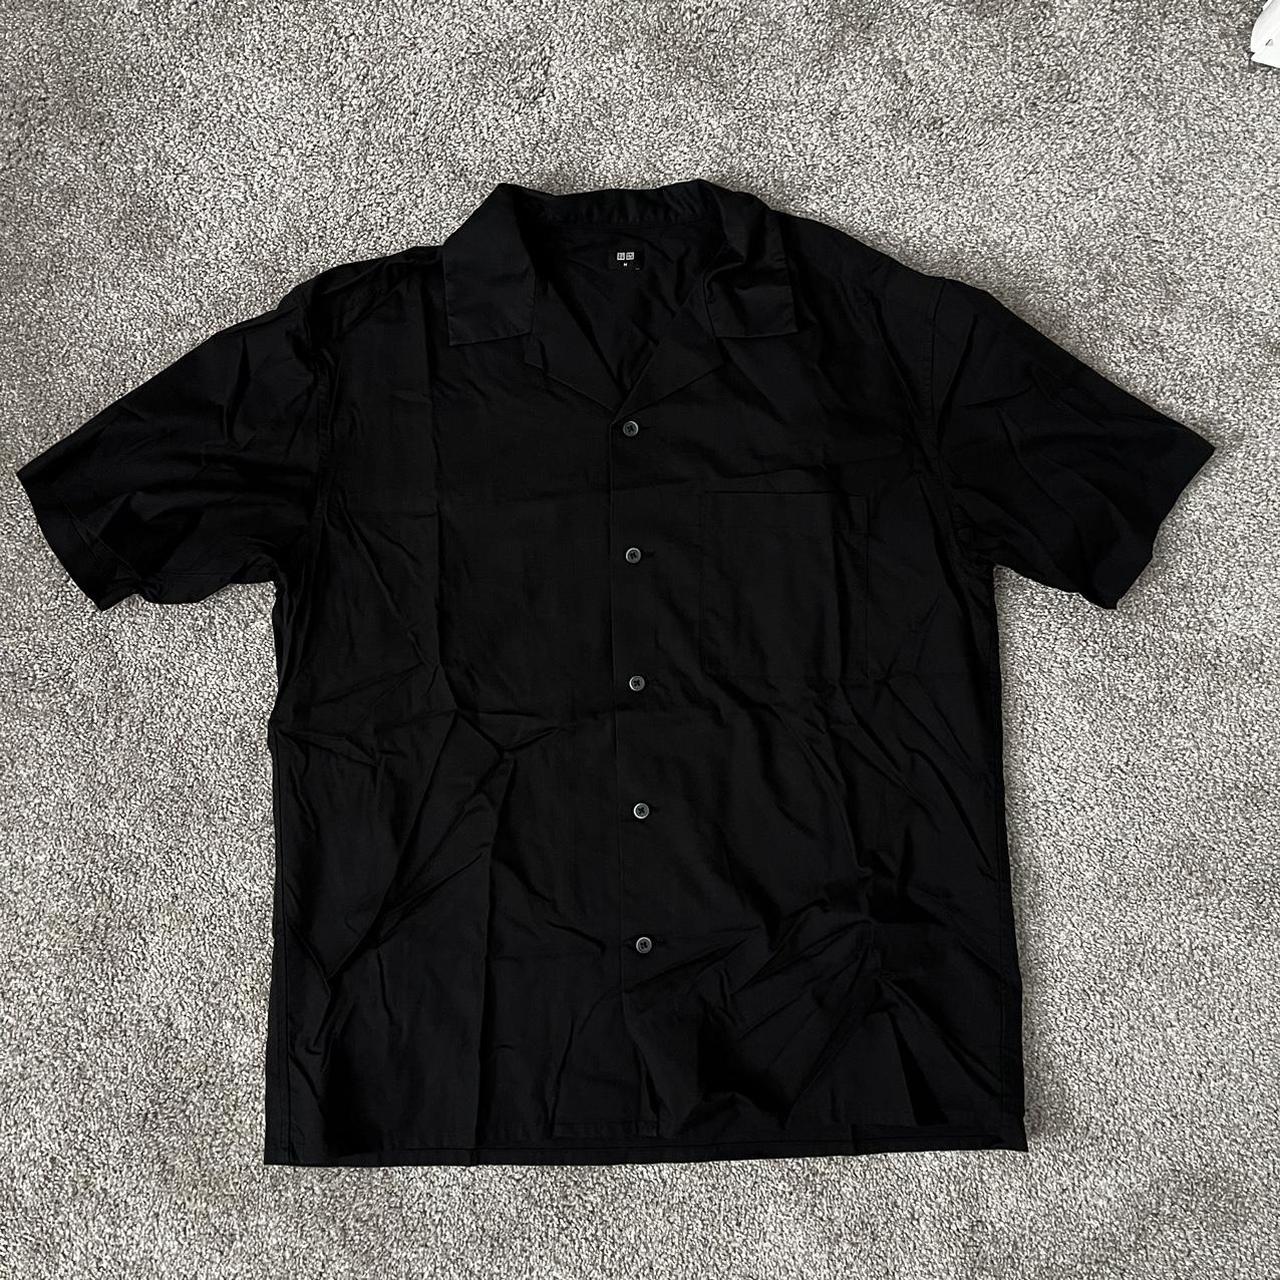 UNIQLO black short sleeve button up shirt | size M |... - Depop